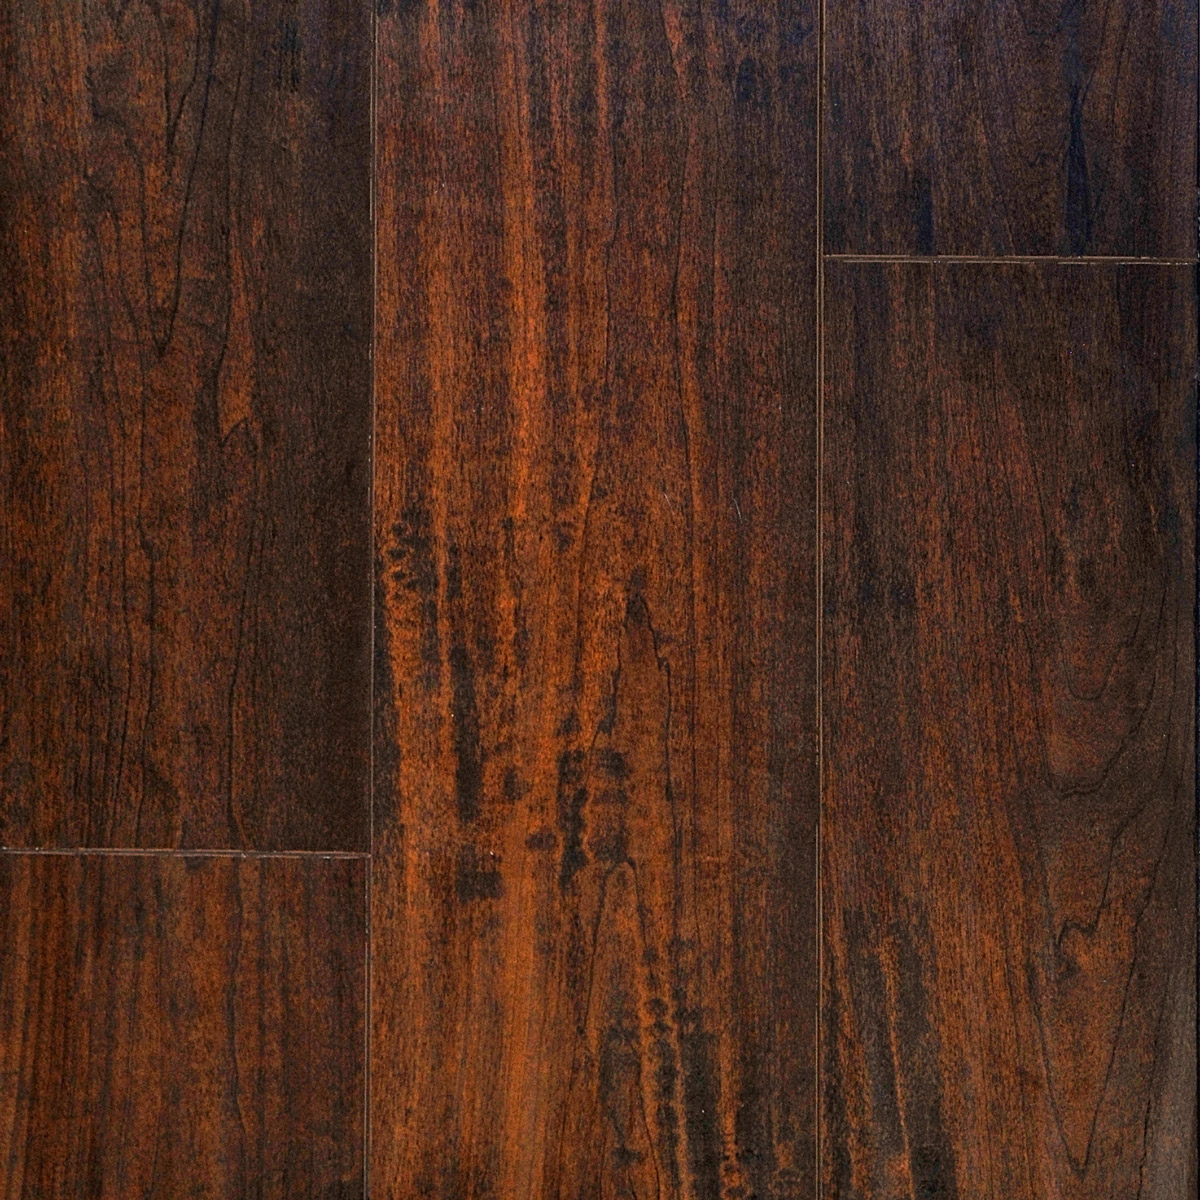 8mm Laminate Flooring Oak, Patina Design Laminate Flooring